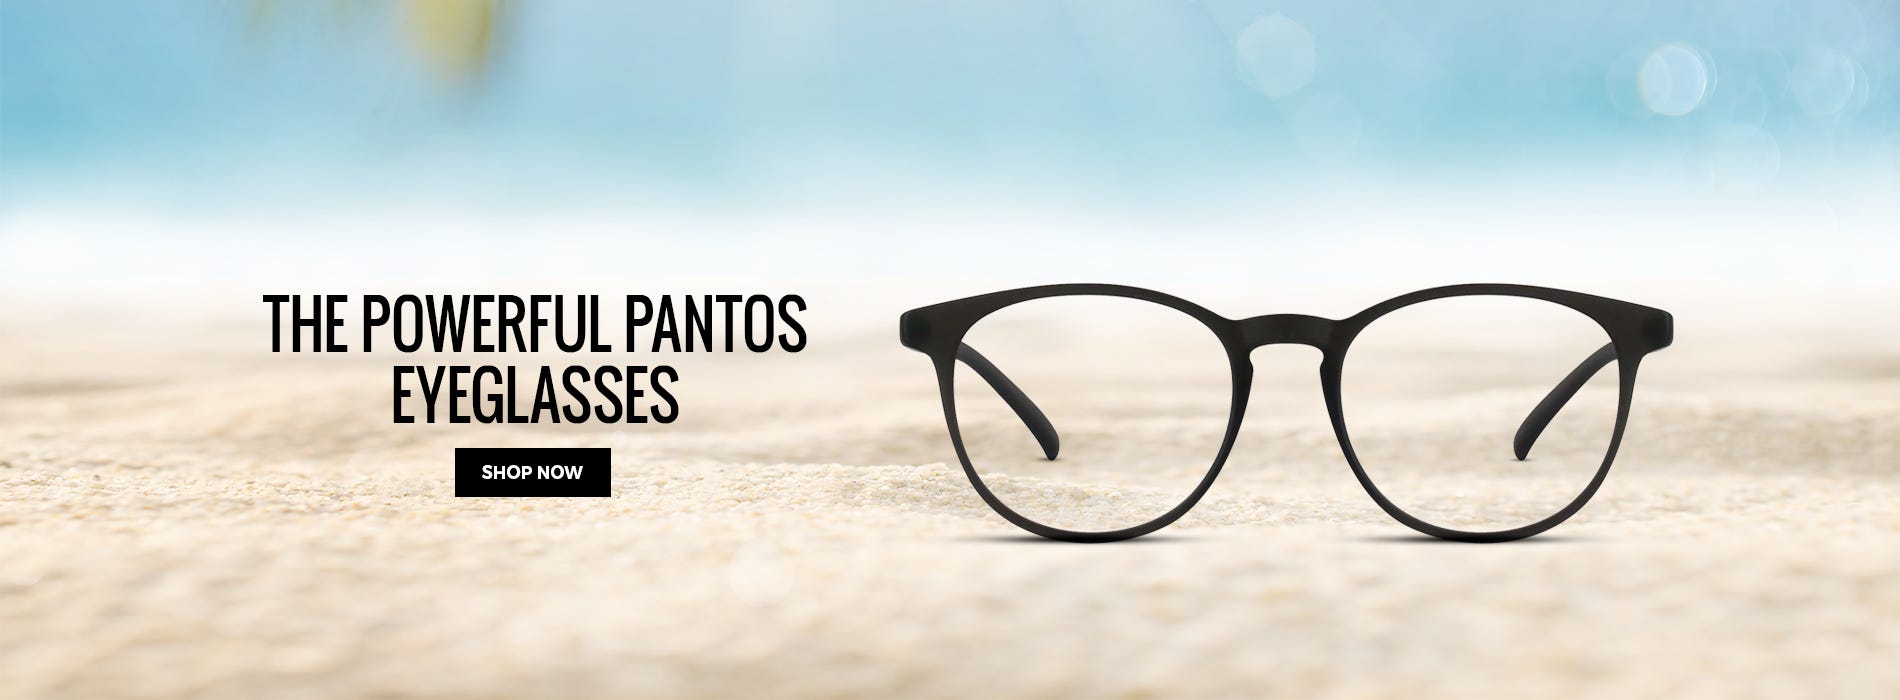 The Powerful Pantos Eyeglasses